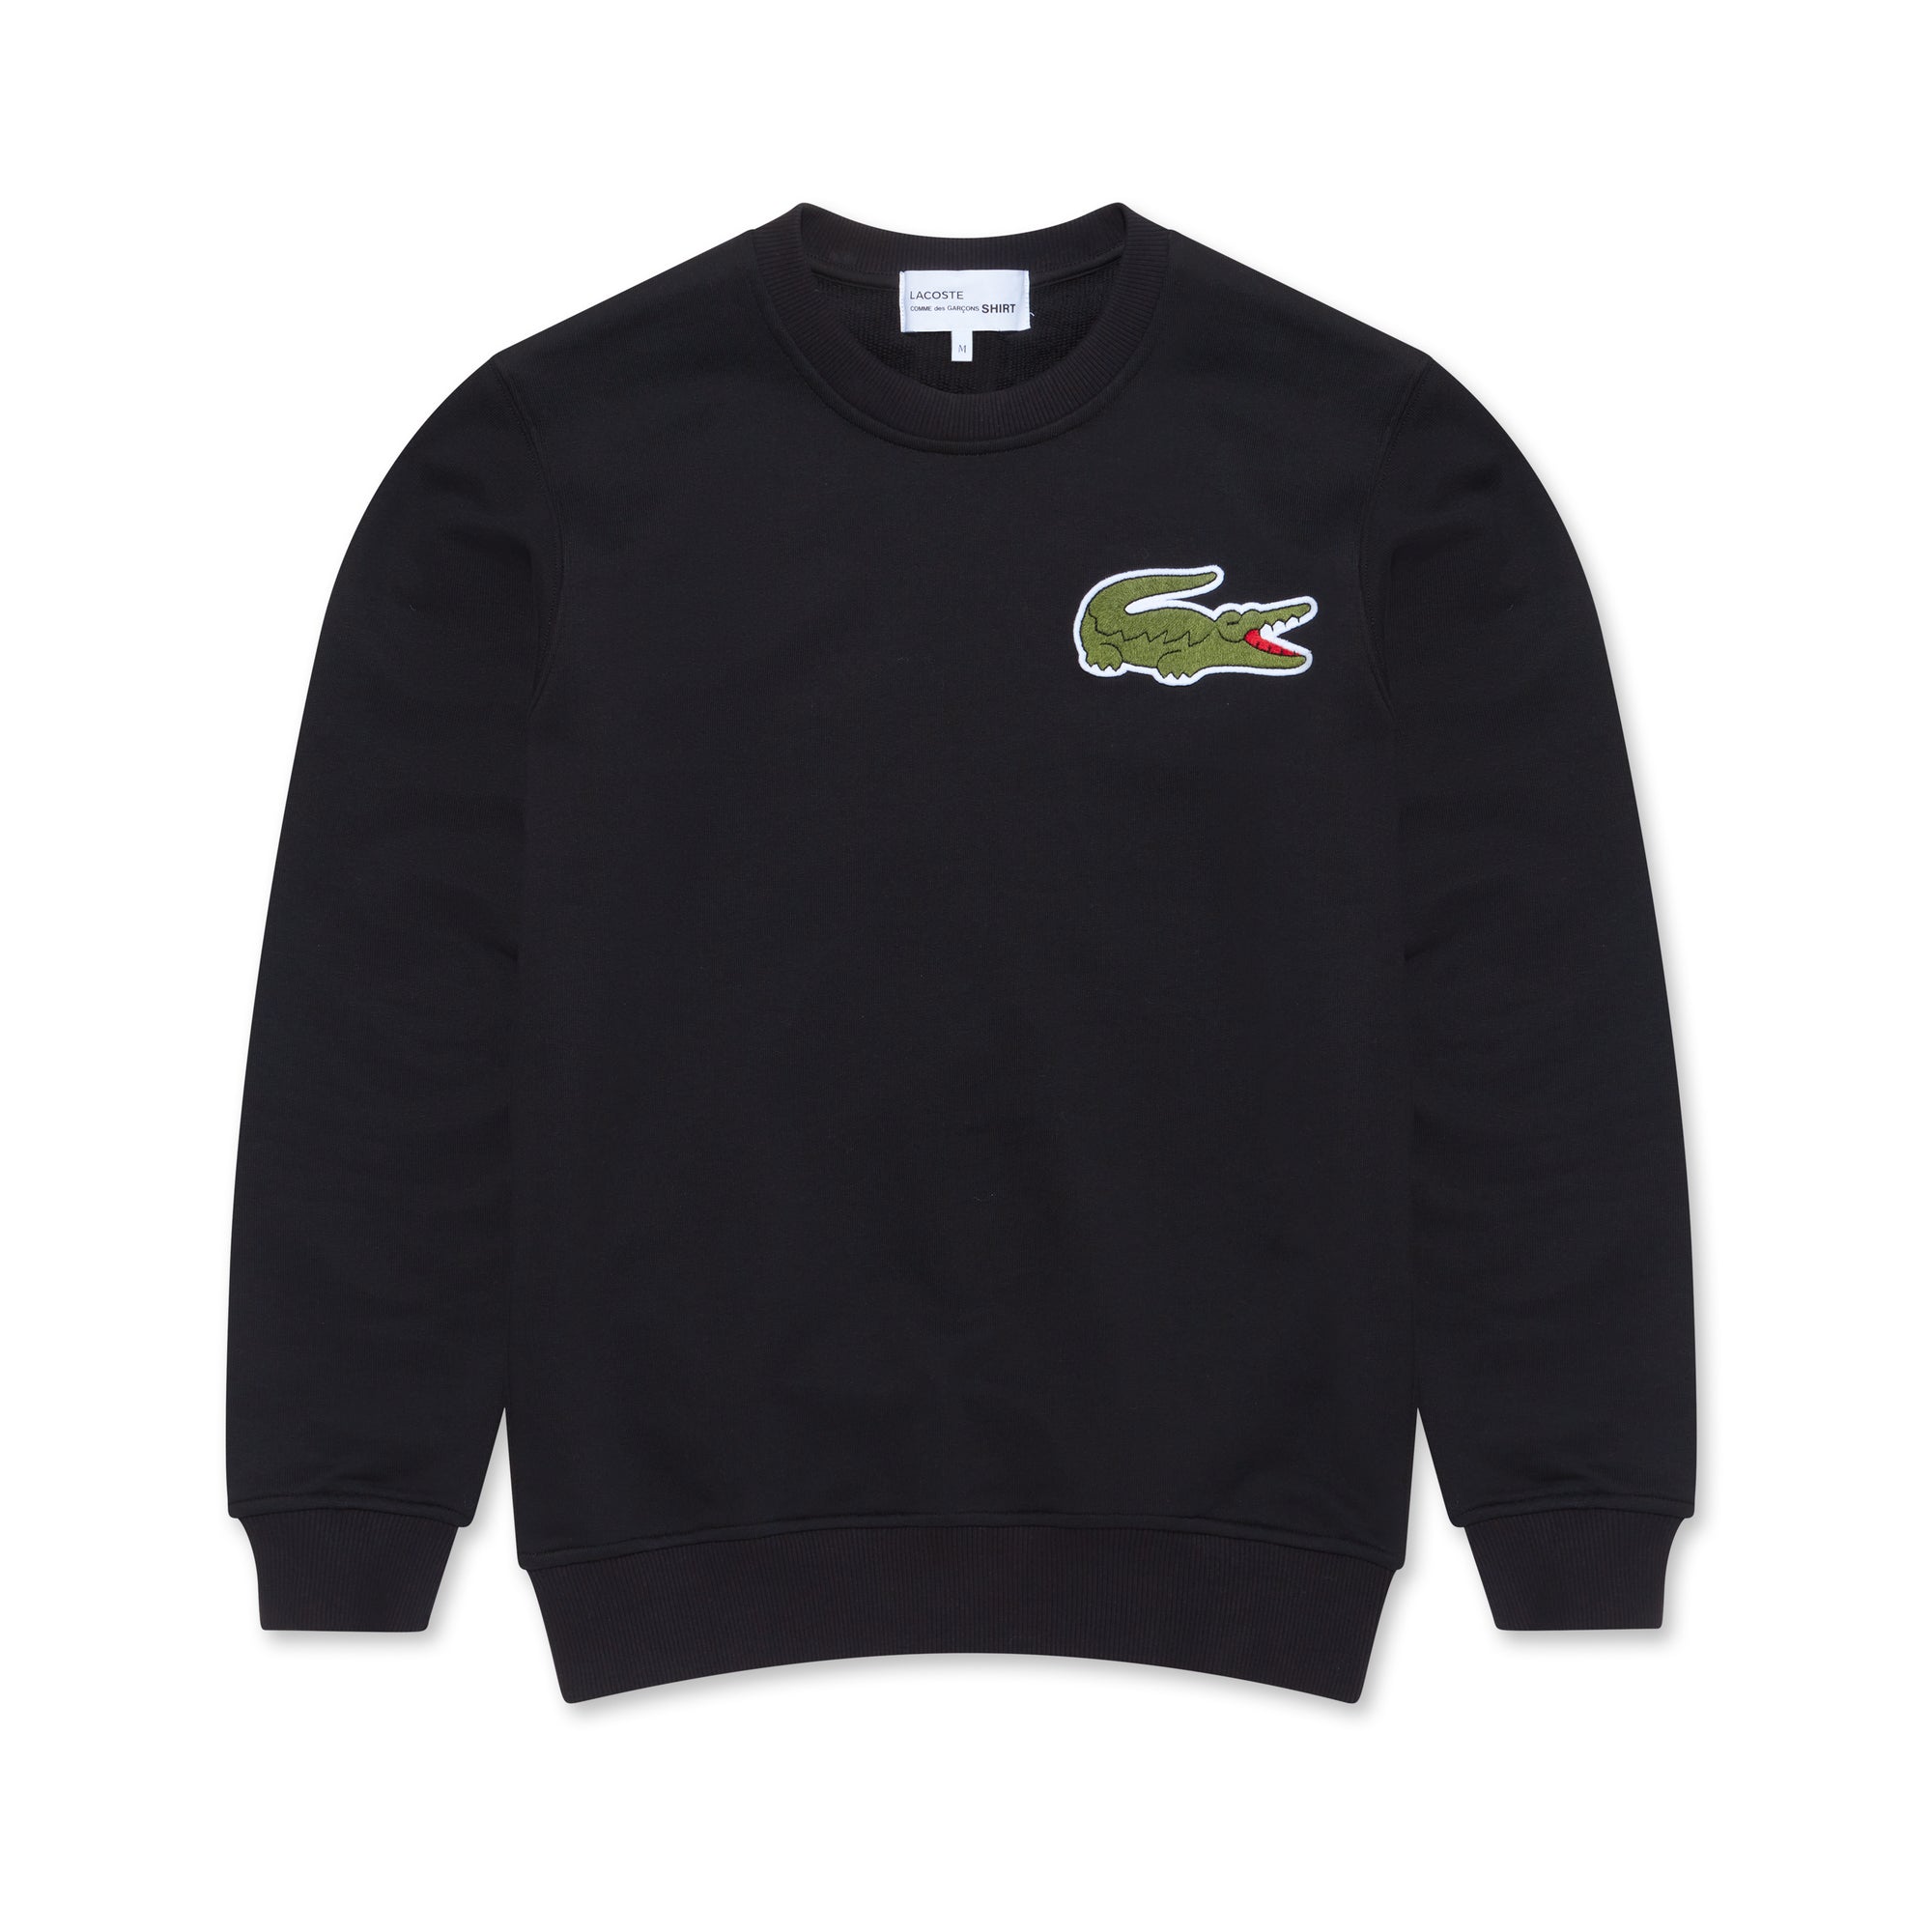 CDG Shirt - Lacoste Men's Cotton Sweatshirt - (Black) view 5